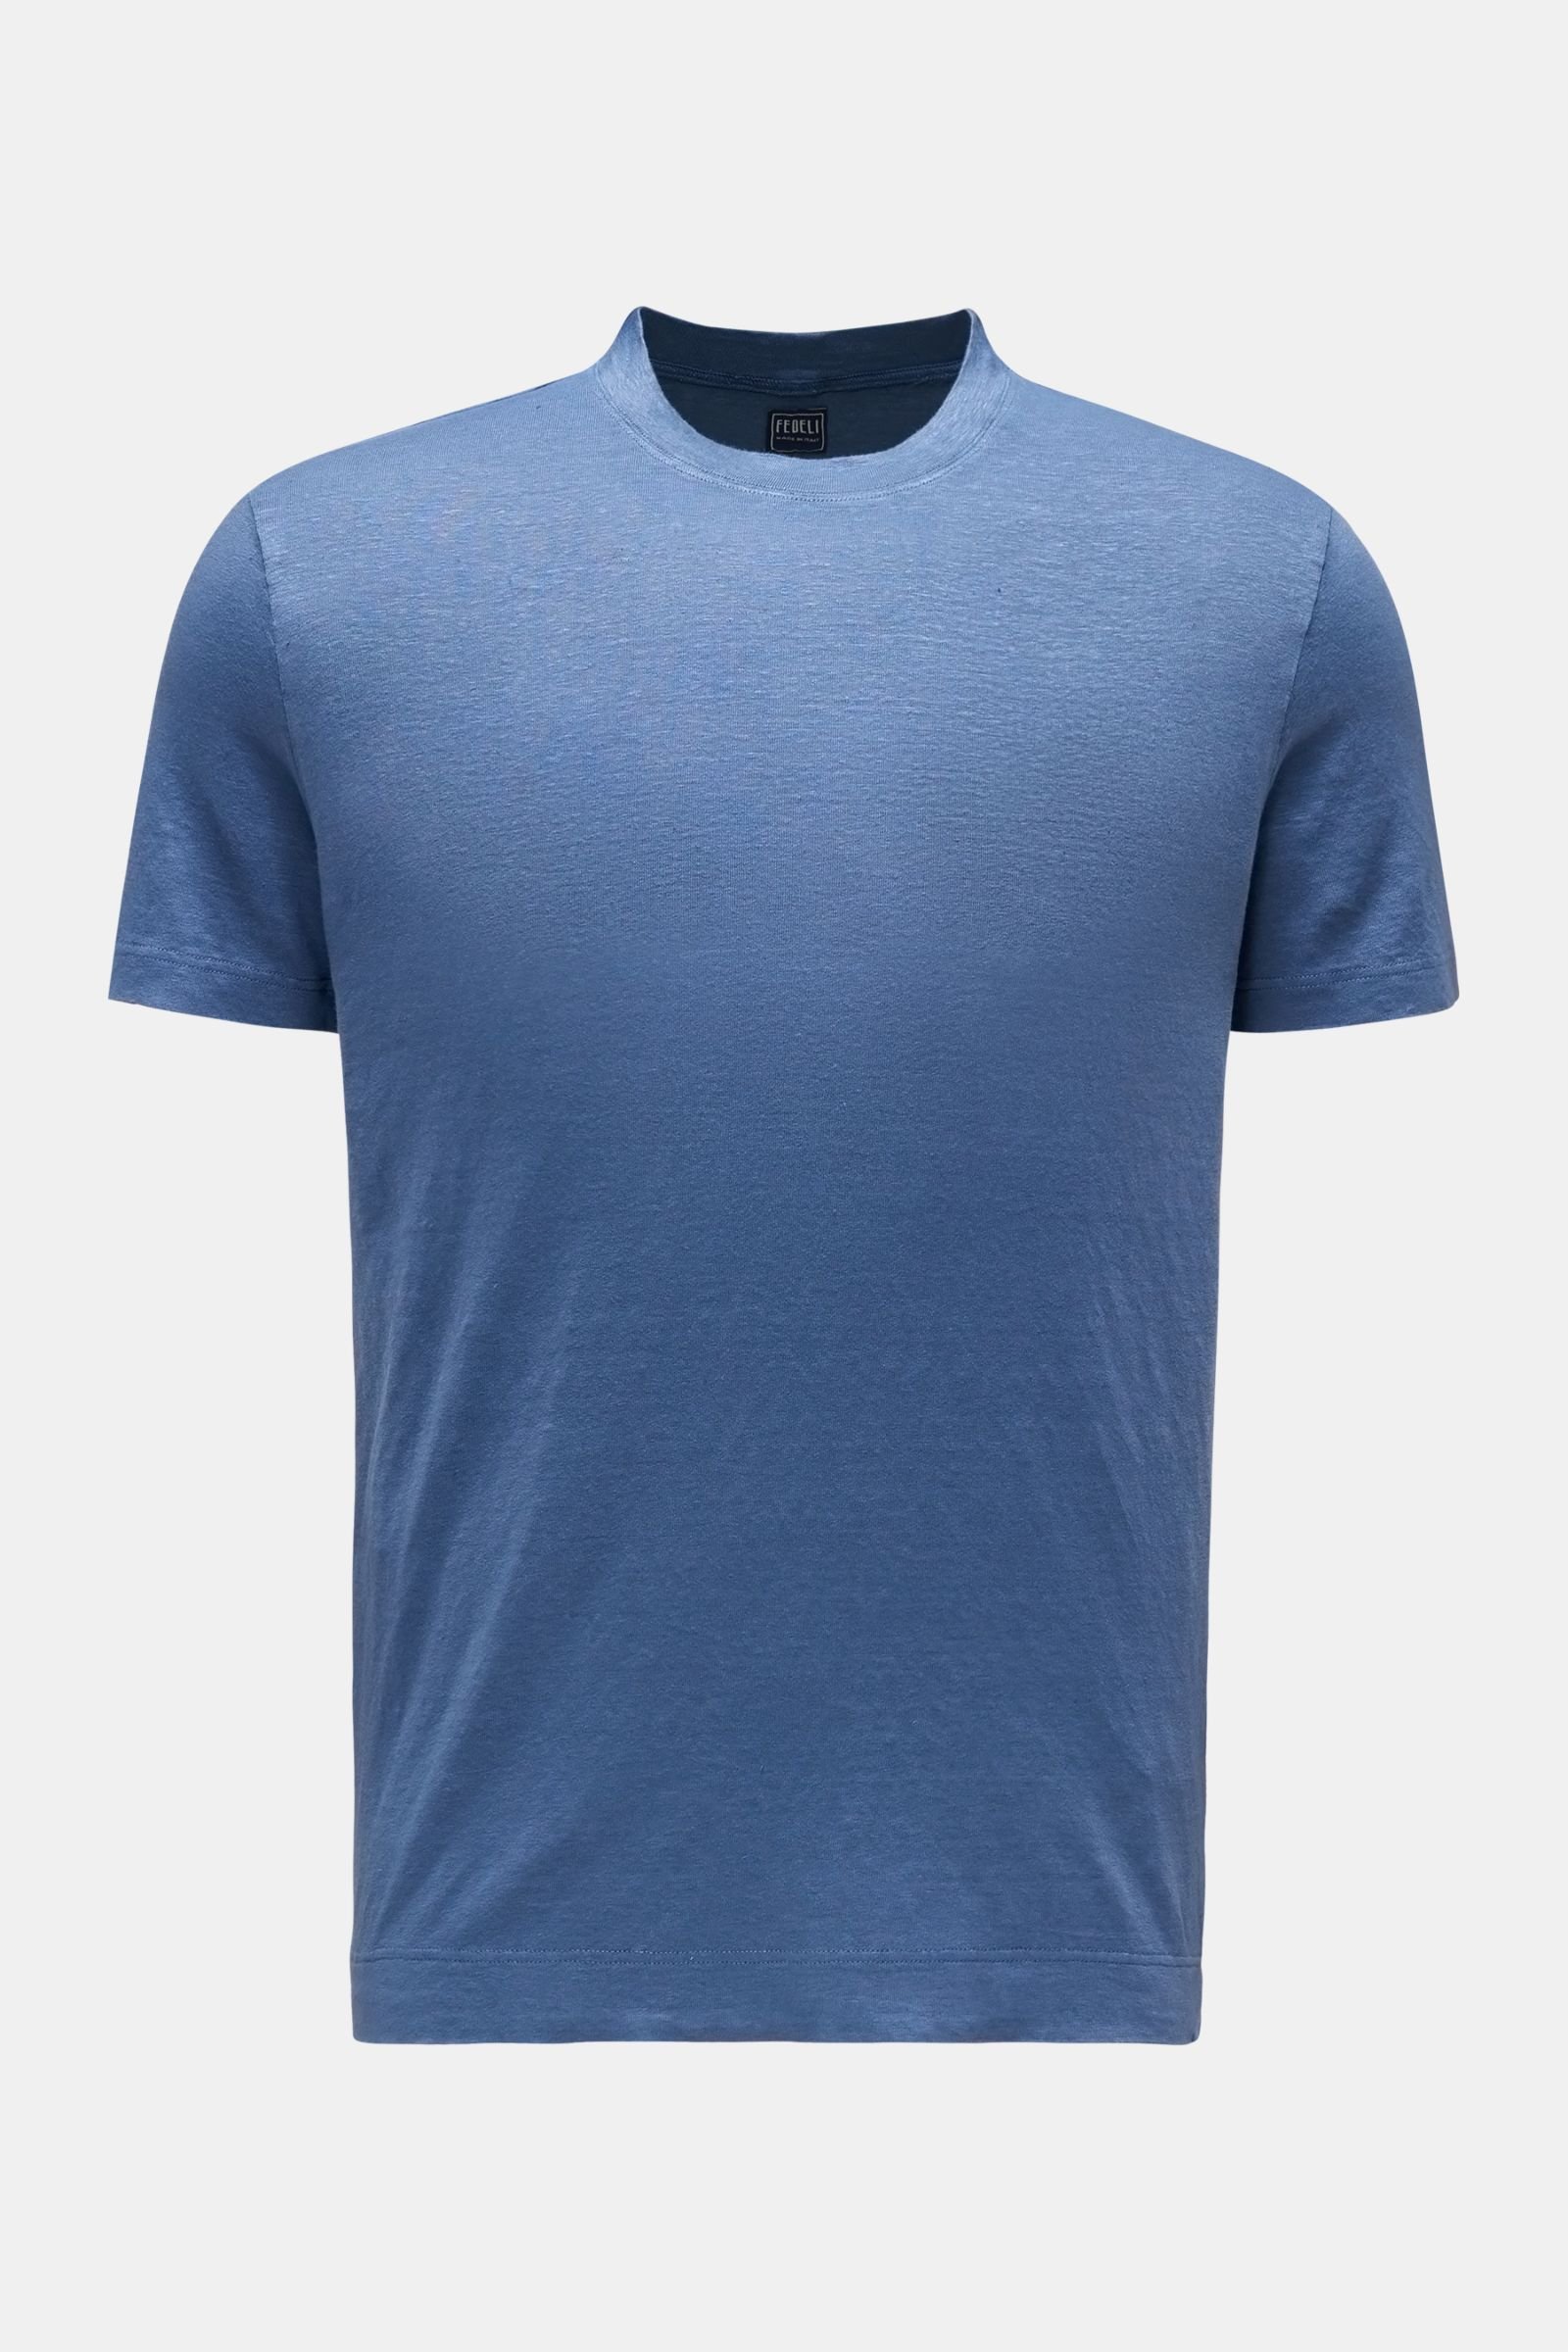 Linen crew neck T-shirt 'Extreme MM' grey-blue